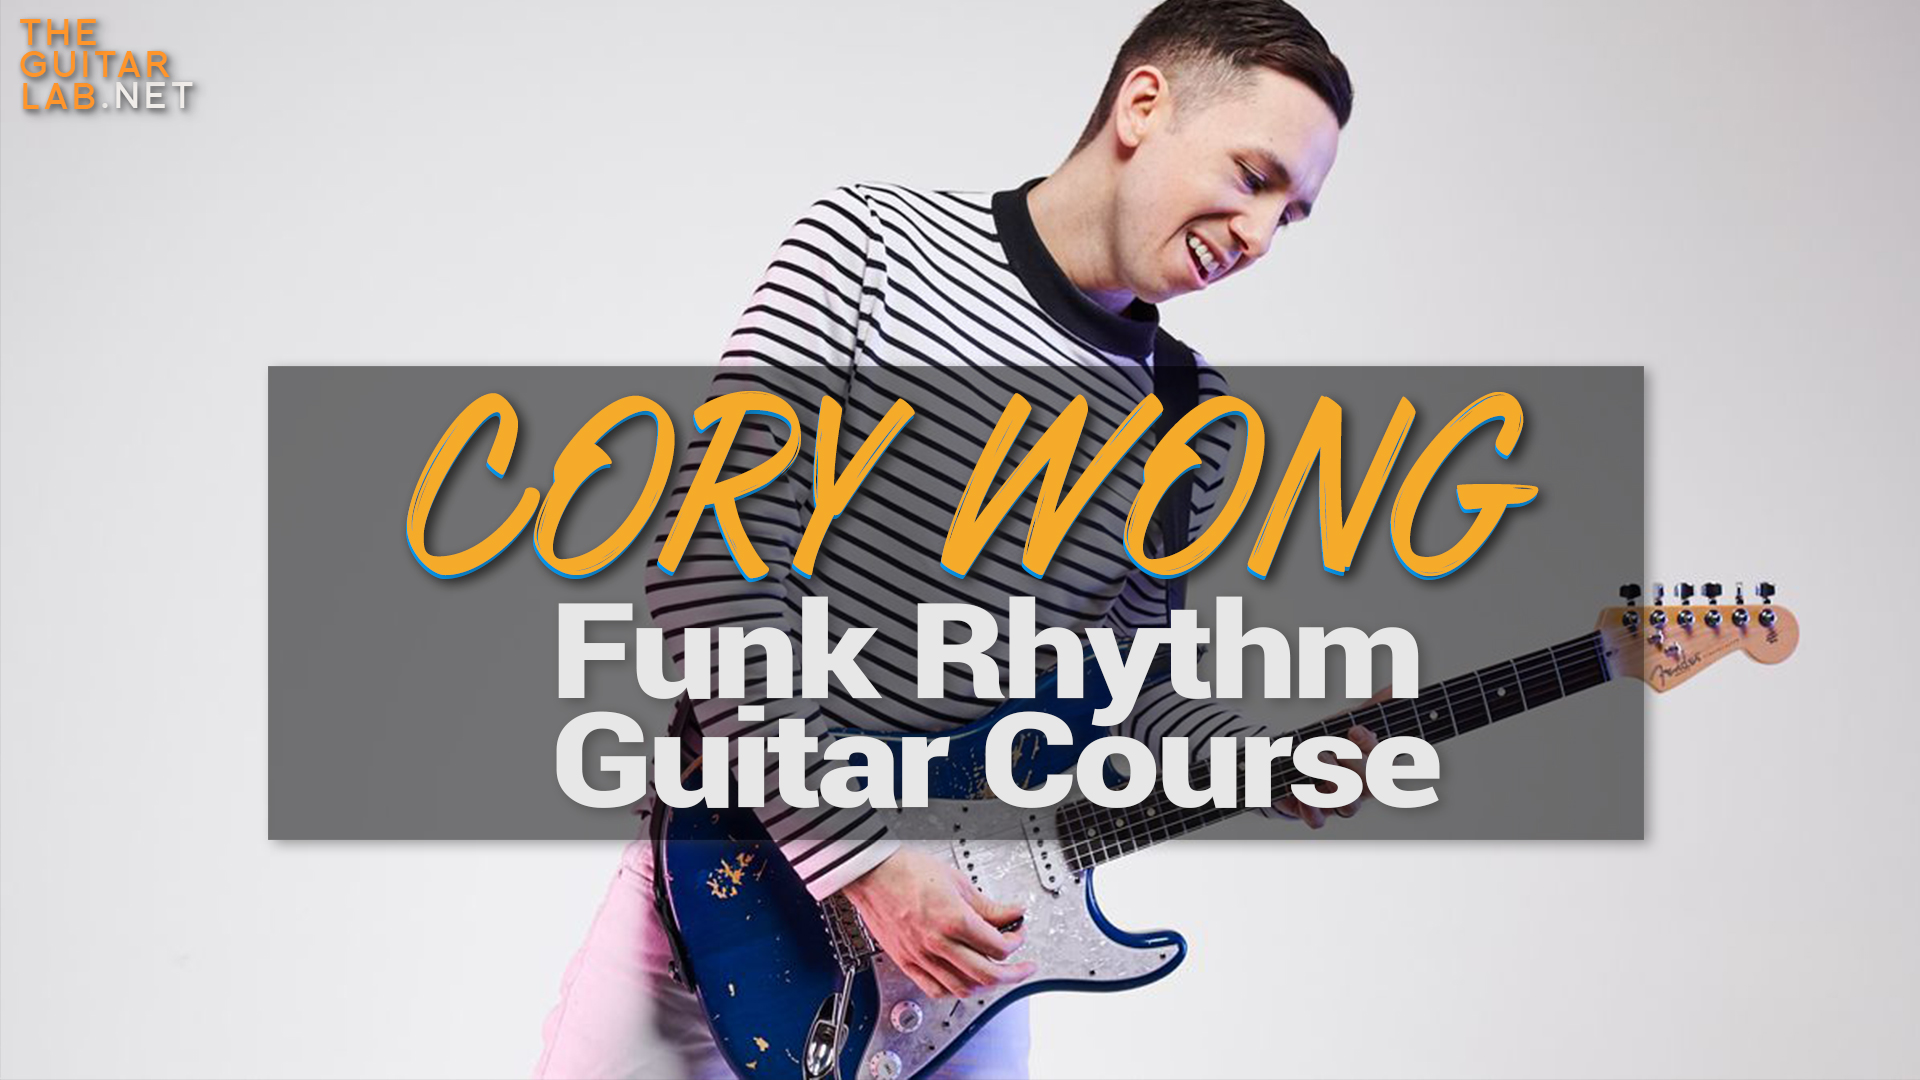 Cory Wong - Funk Rhythm Guitar Course